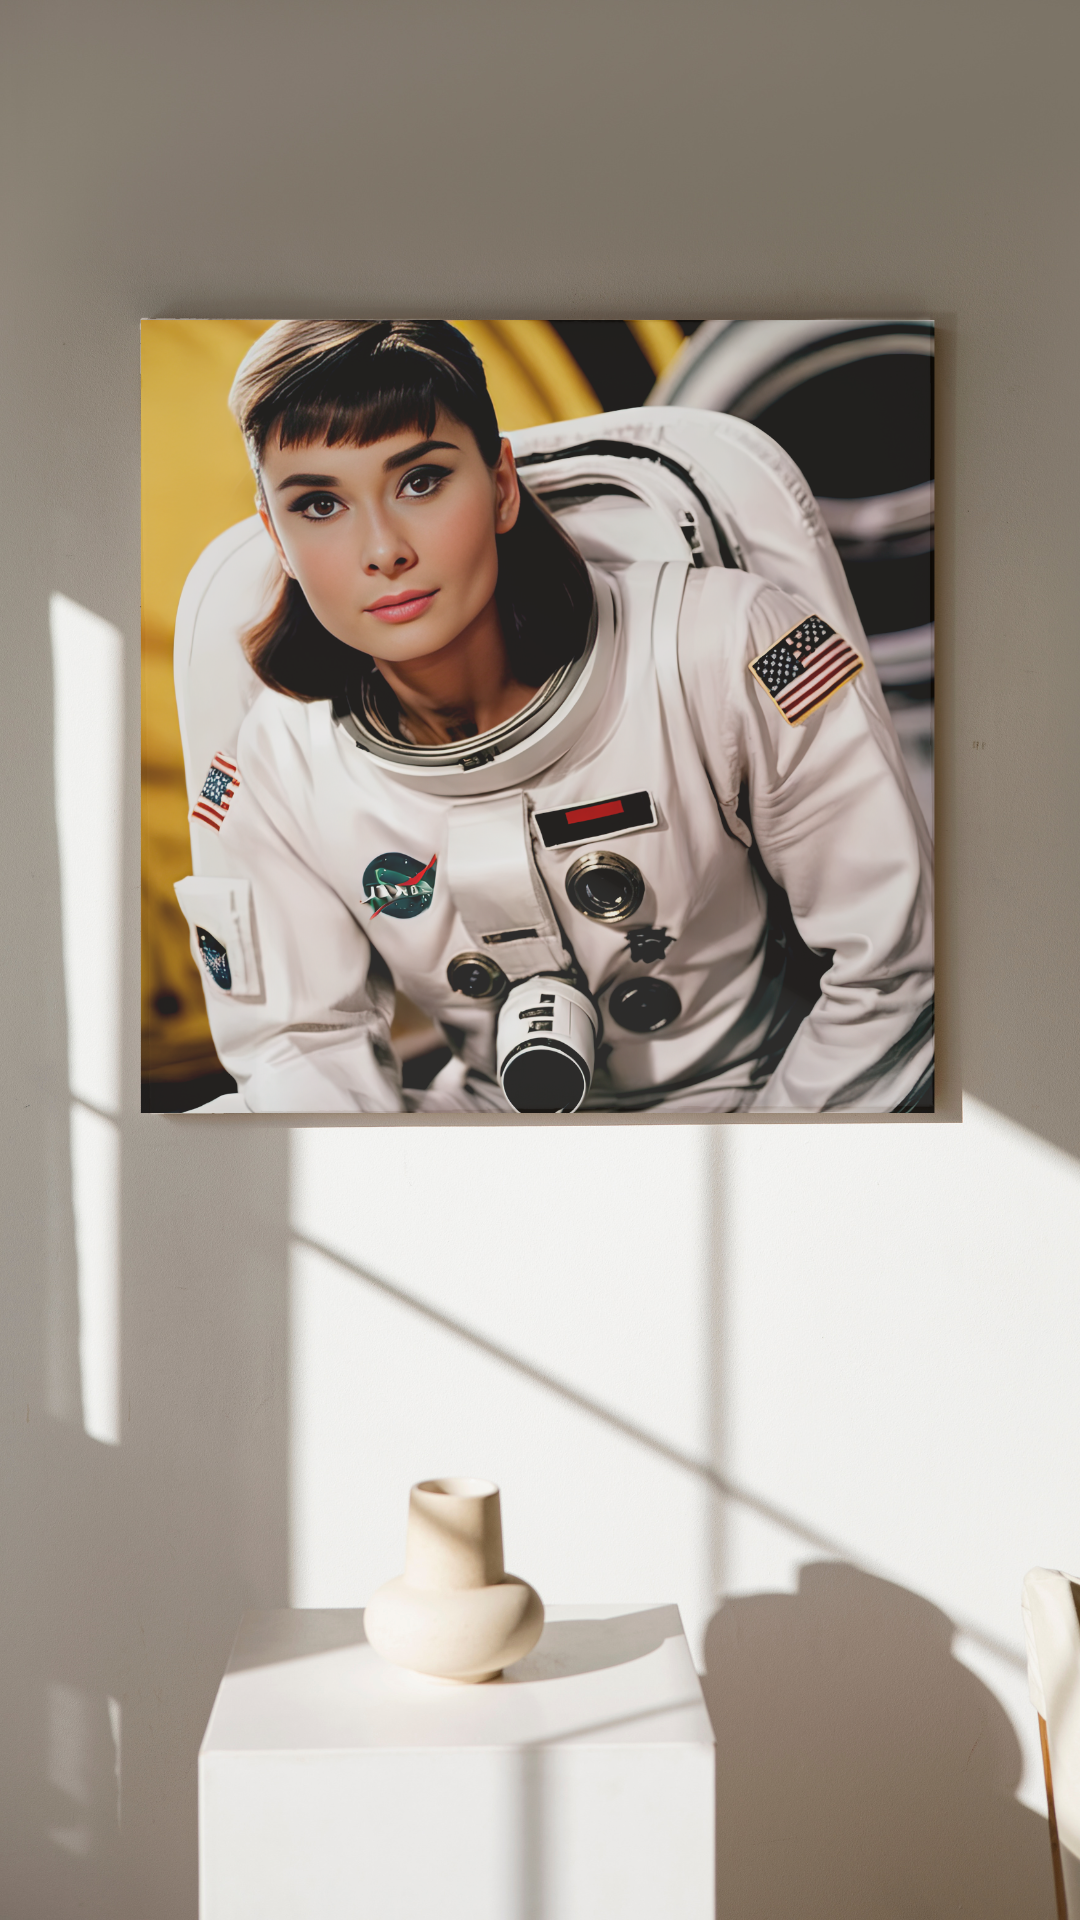 Digital Art: Galactic Grace: Audrey Hepburn's Celestial Voyage Art Print, Space Art, Gift, Woman in Space, NASA art, decor, canvas art, SpaceX art, Space Travel Art